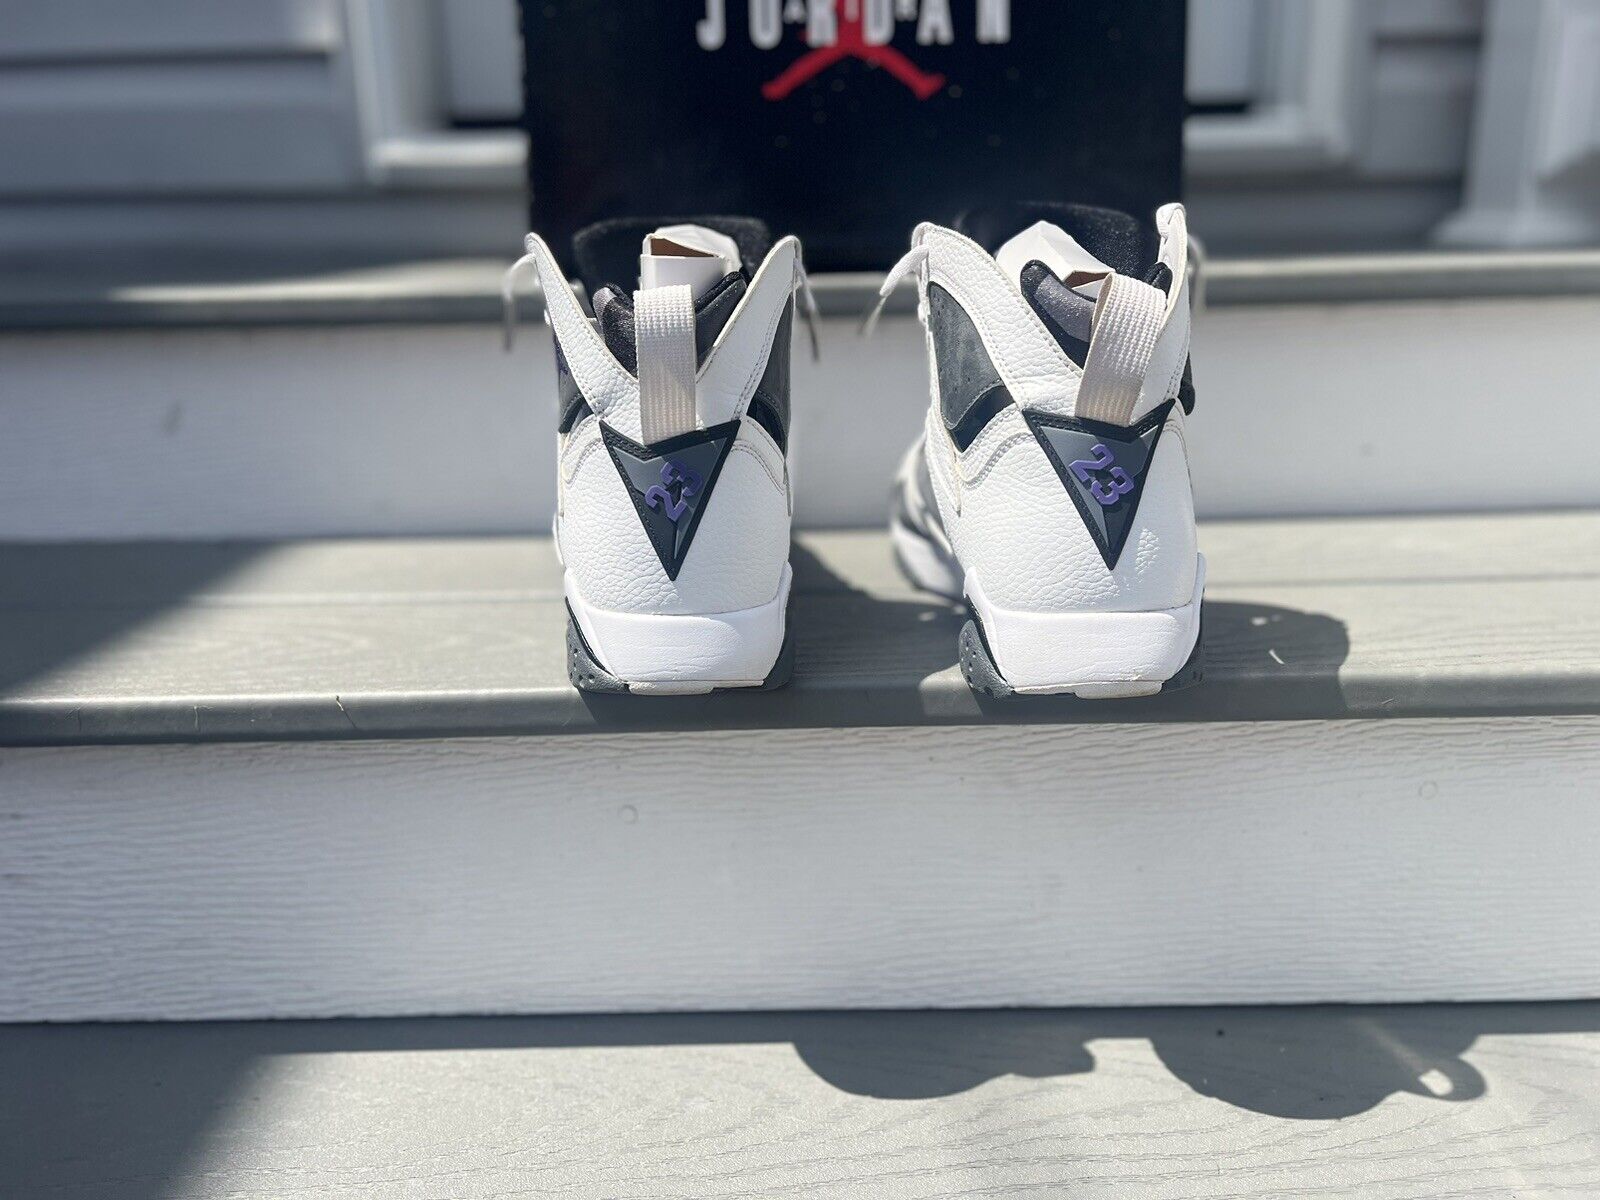 Nike Air Jordan VII “Flint Grey” Size 11.5. - image 4